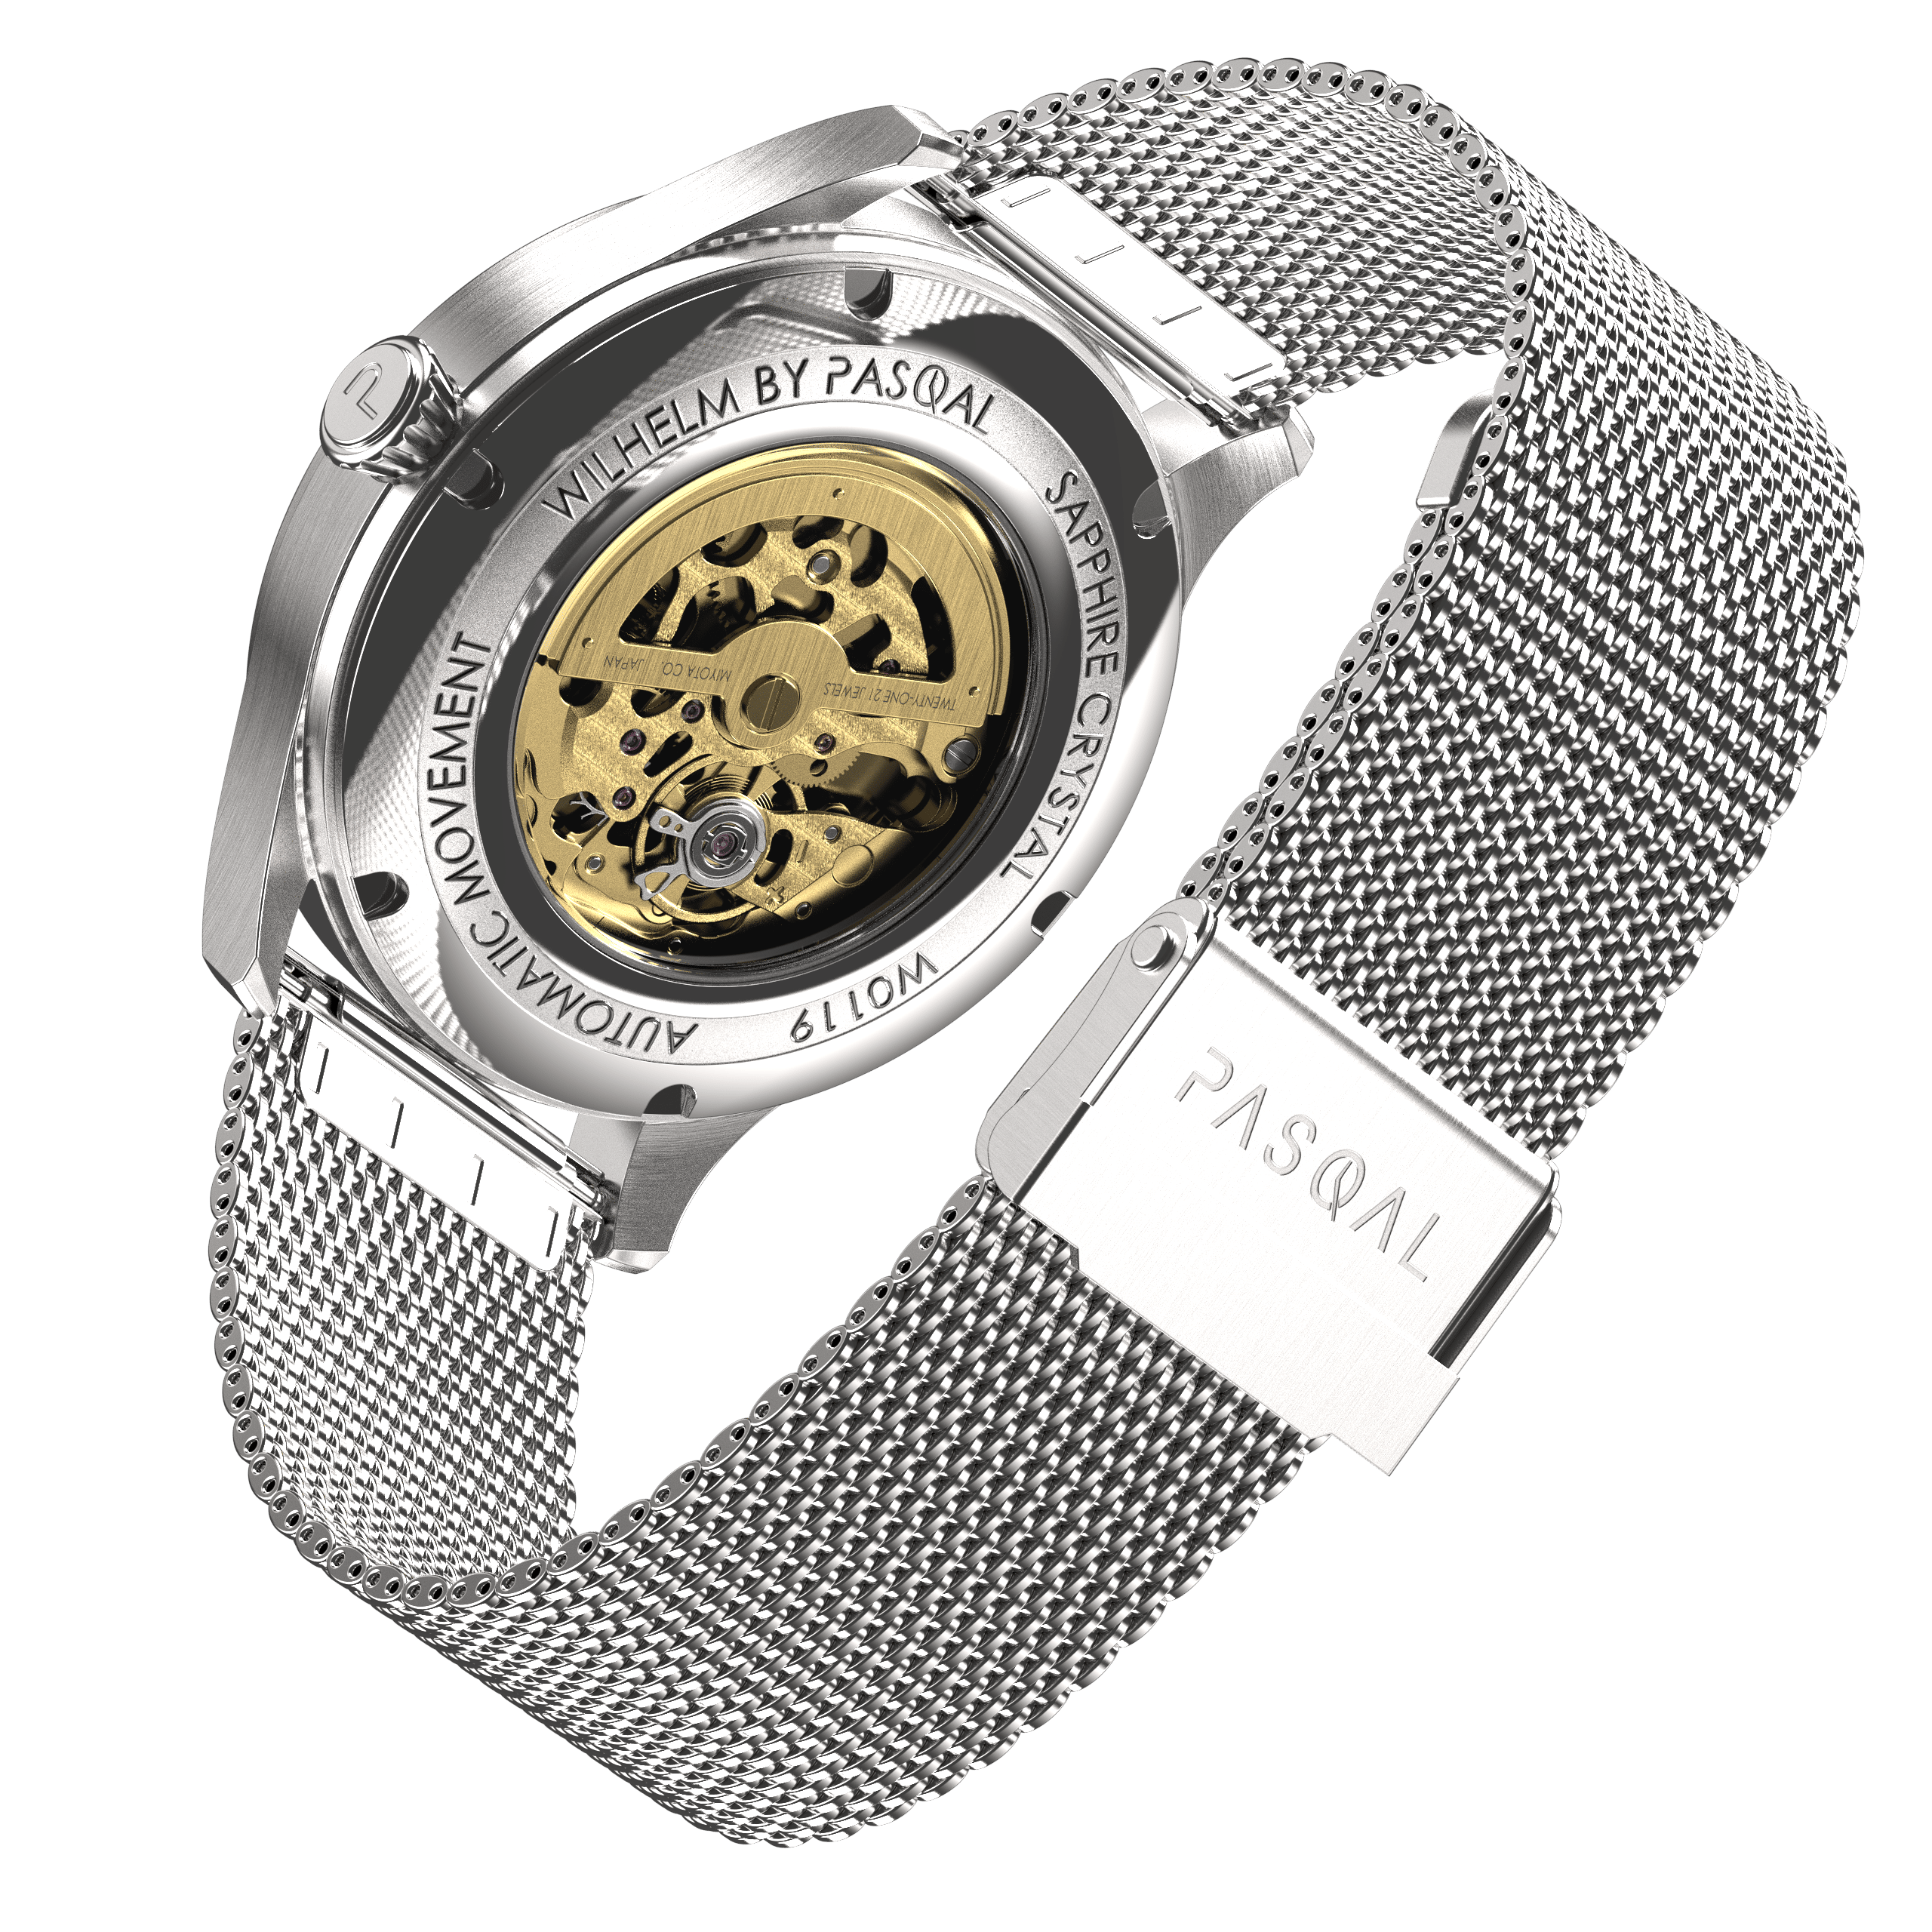 Wilhelm 42 Silver/White - Pasqal Watches